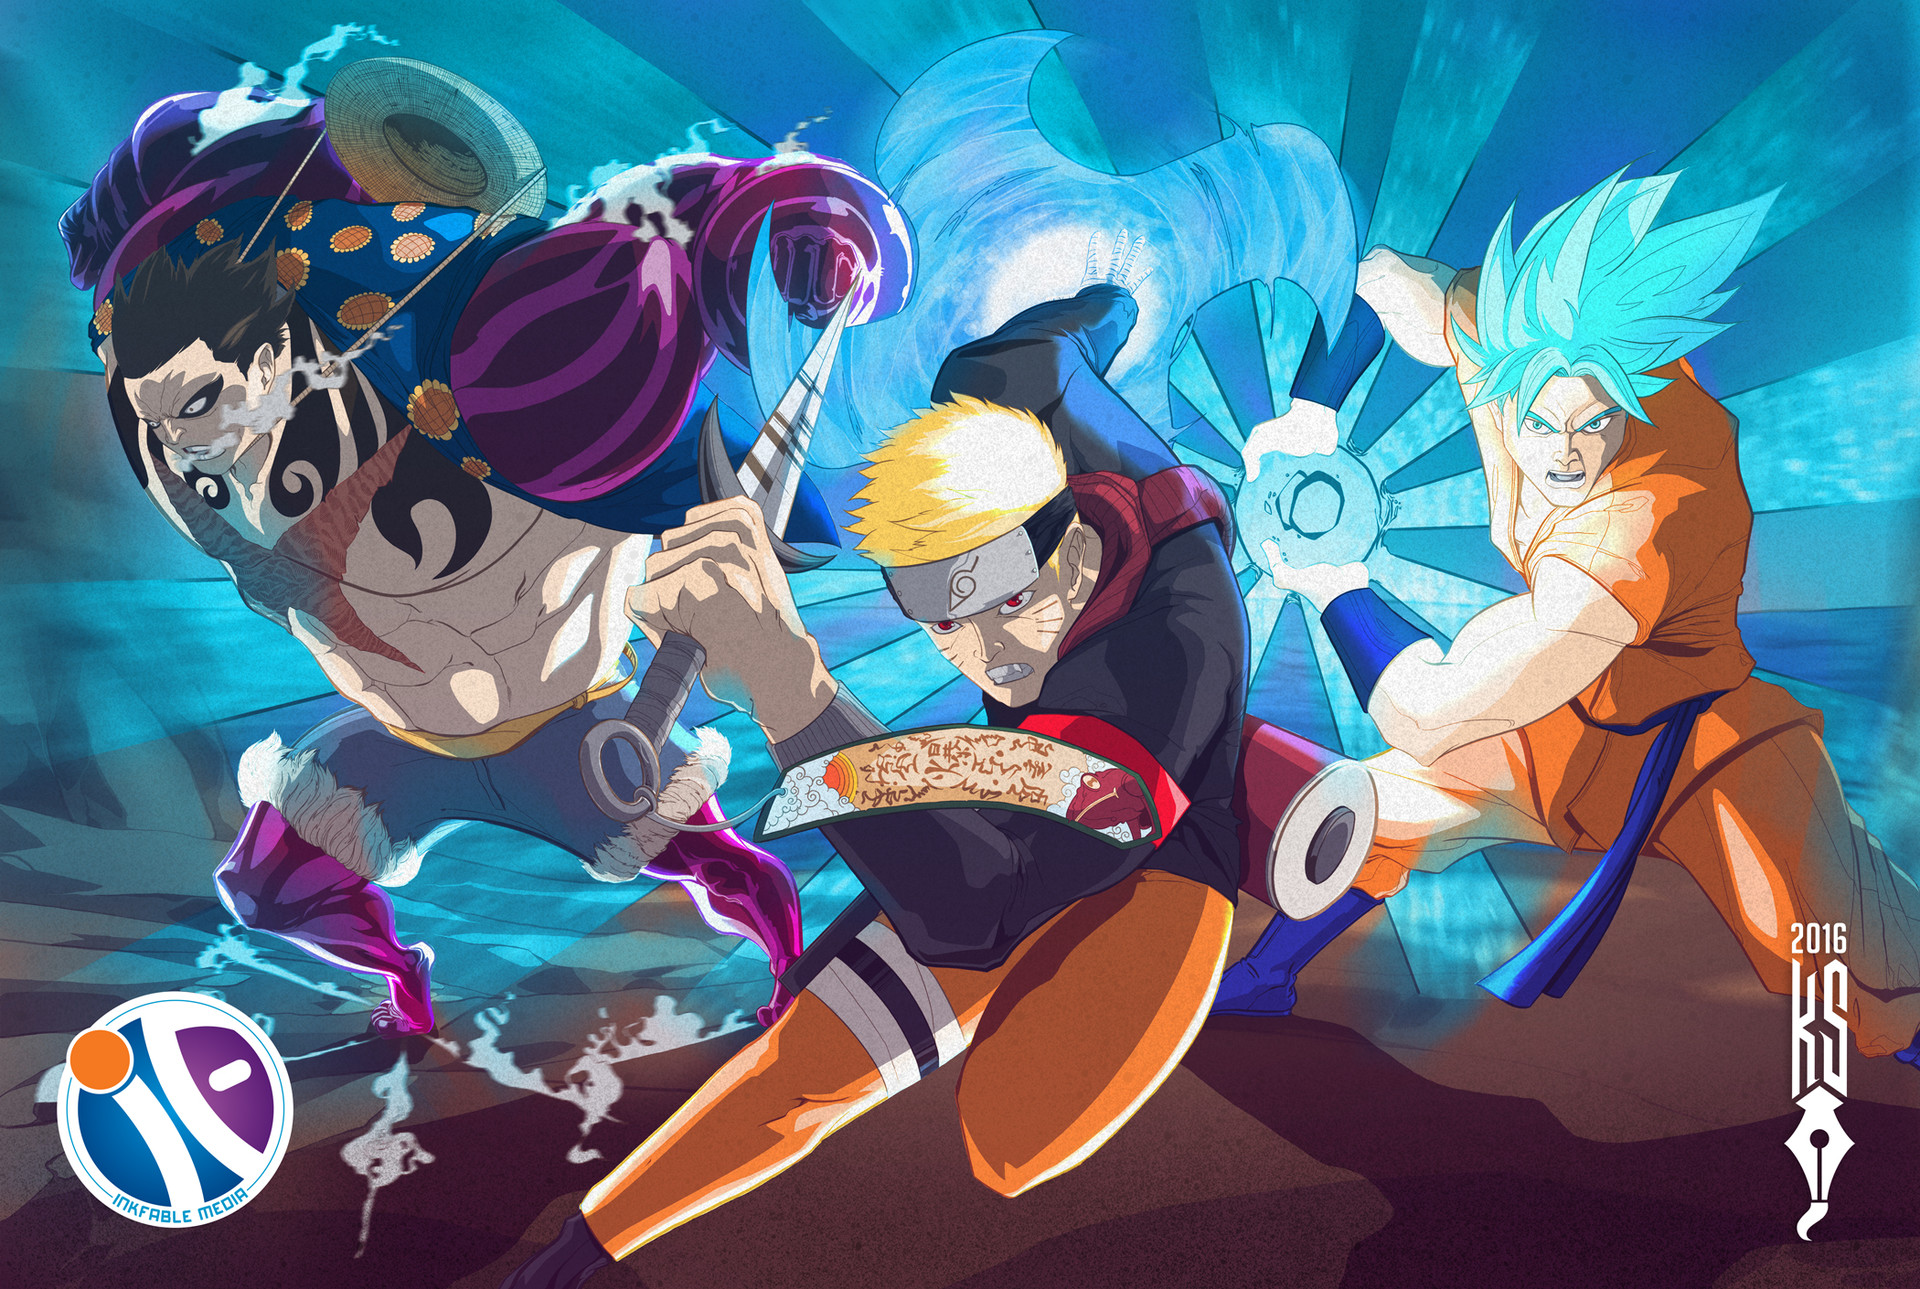 Monkey D Luffy 4th Gear, Naruto The Last Costume and Super Saiyan Blue Goku...